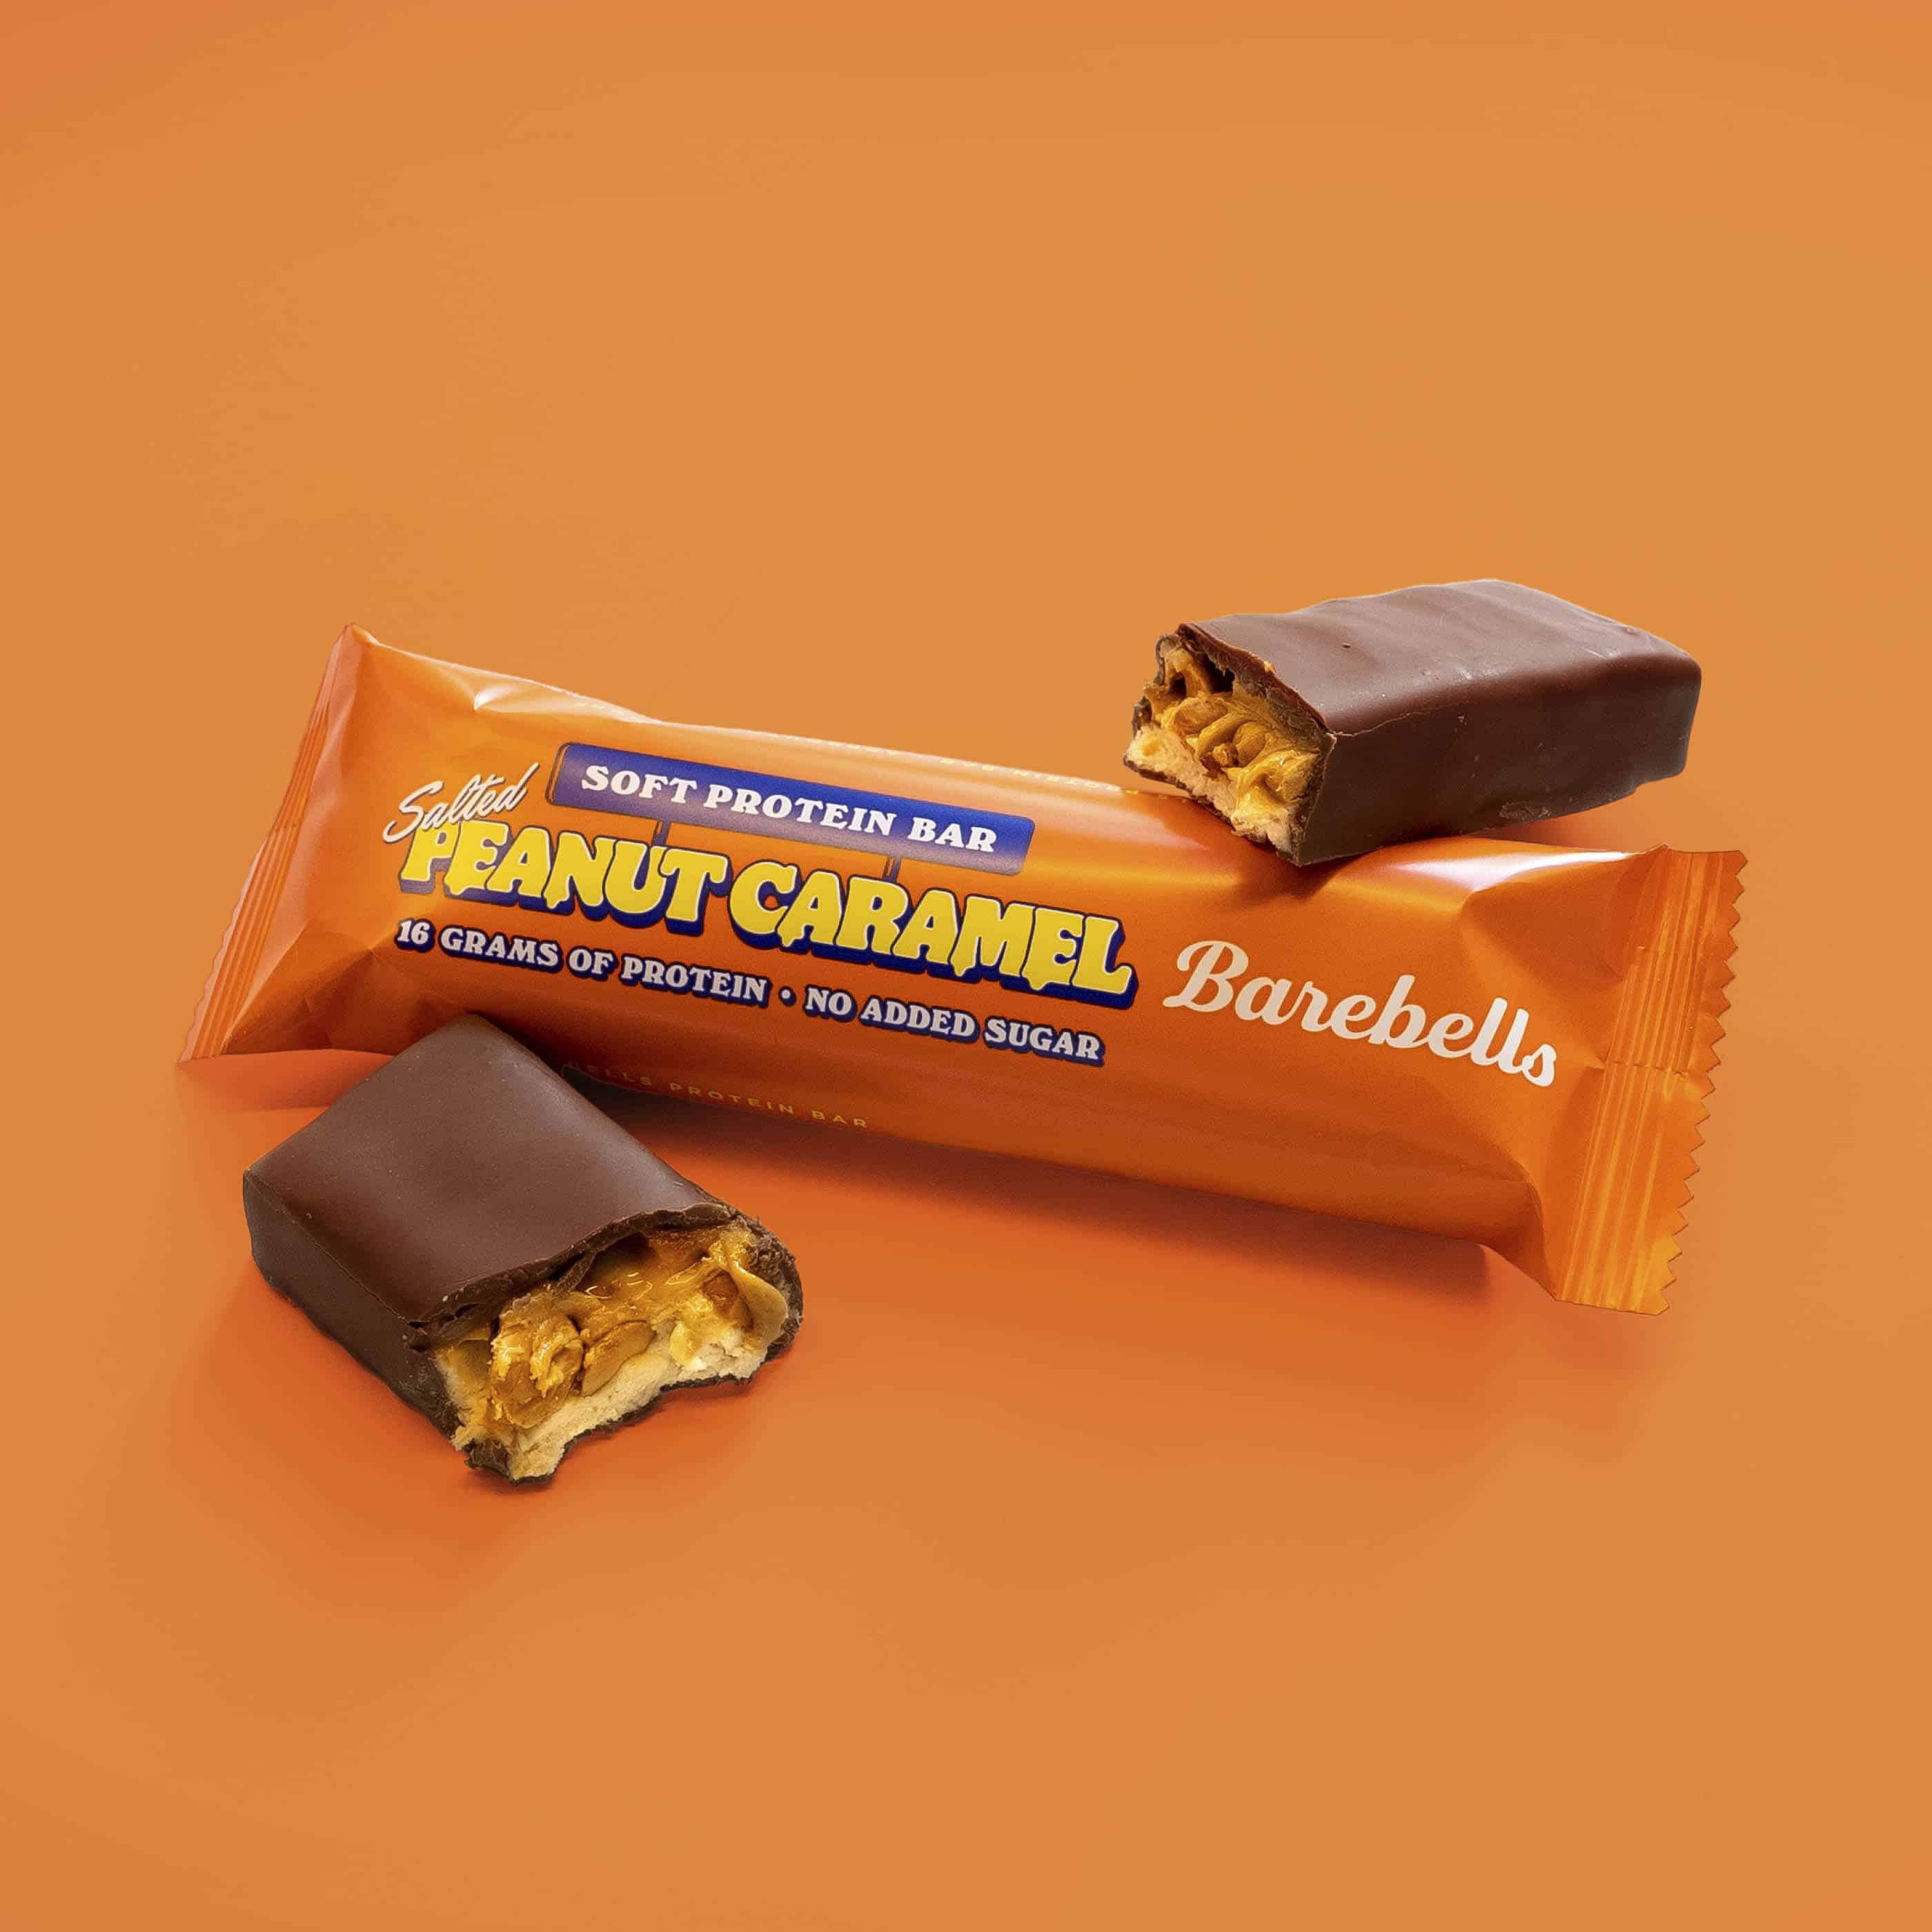 Barebells Soft Bar Peanut Caramel